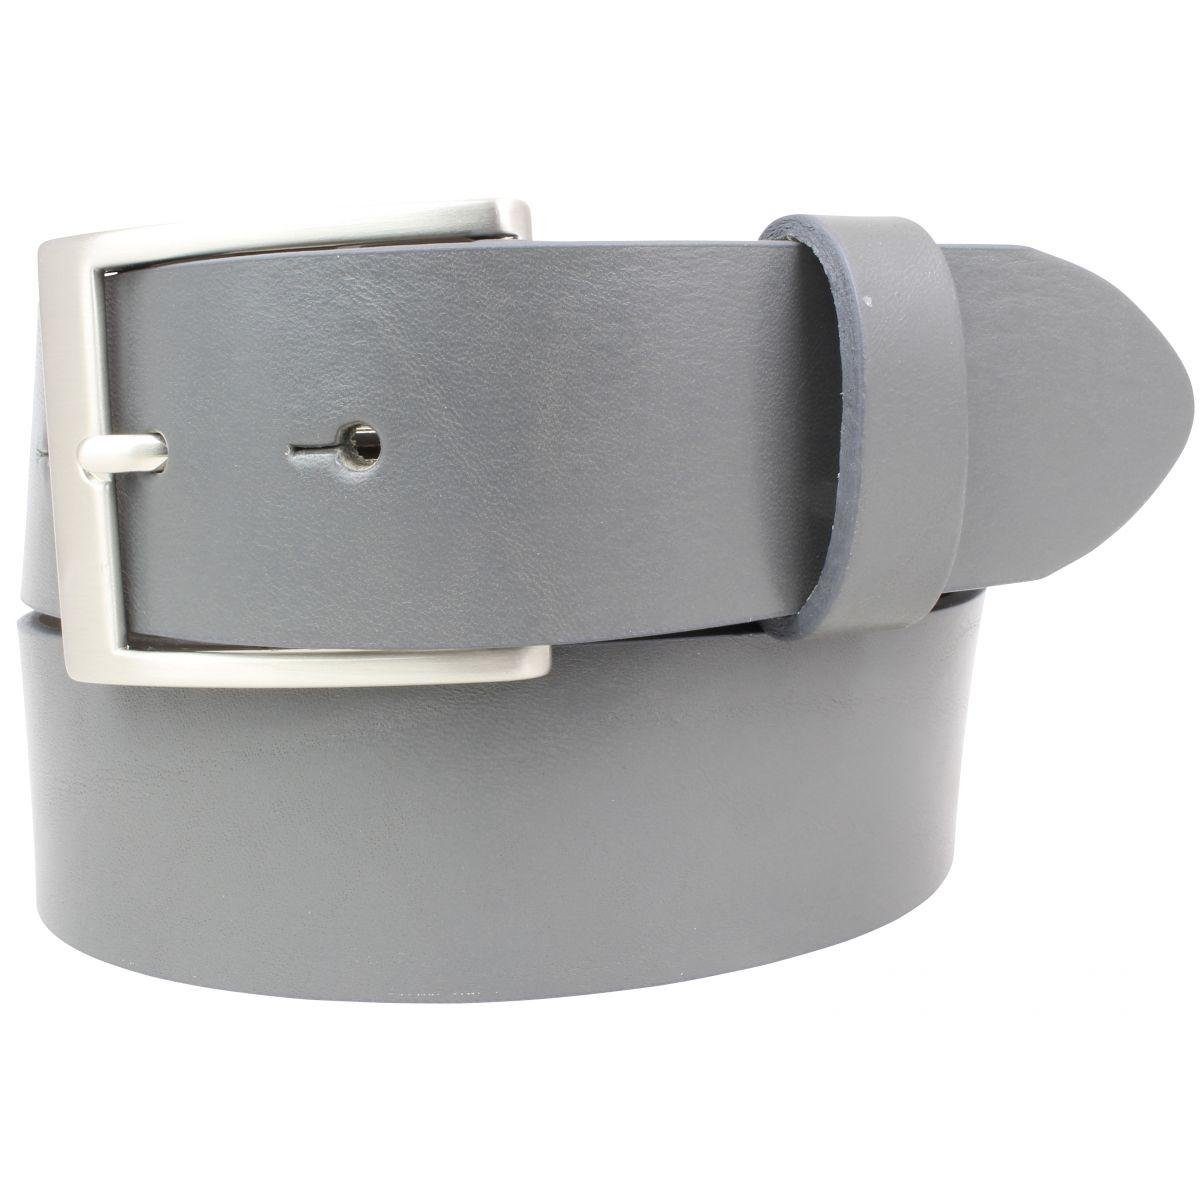 BELTINGER Ledergürtel Hochwertiger Gürtel mit Edelstahl-Gürtelschnalle aus Vollrindleder 4 c Dunkelgrau, Silber